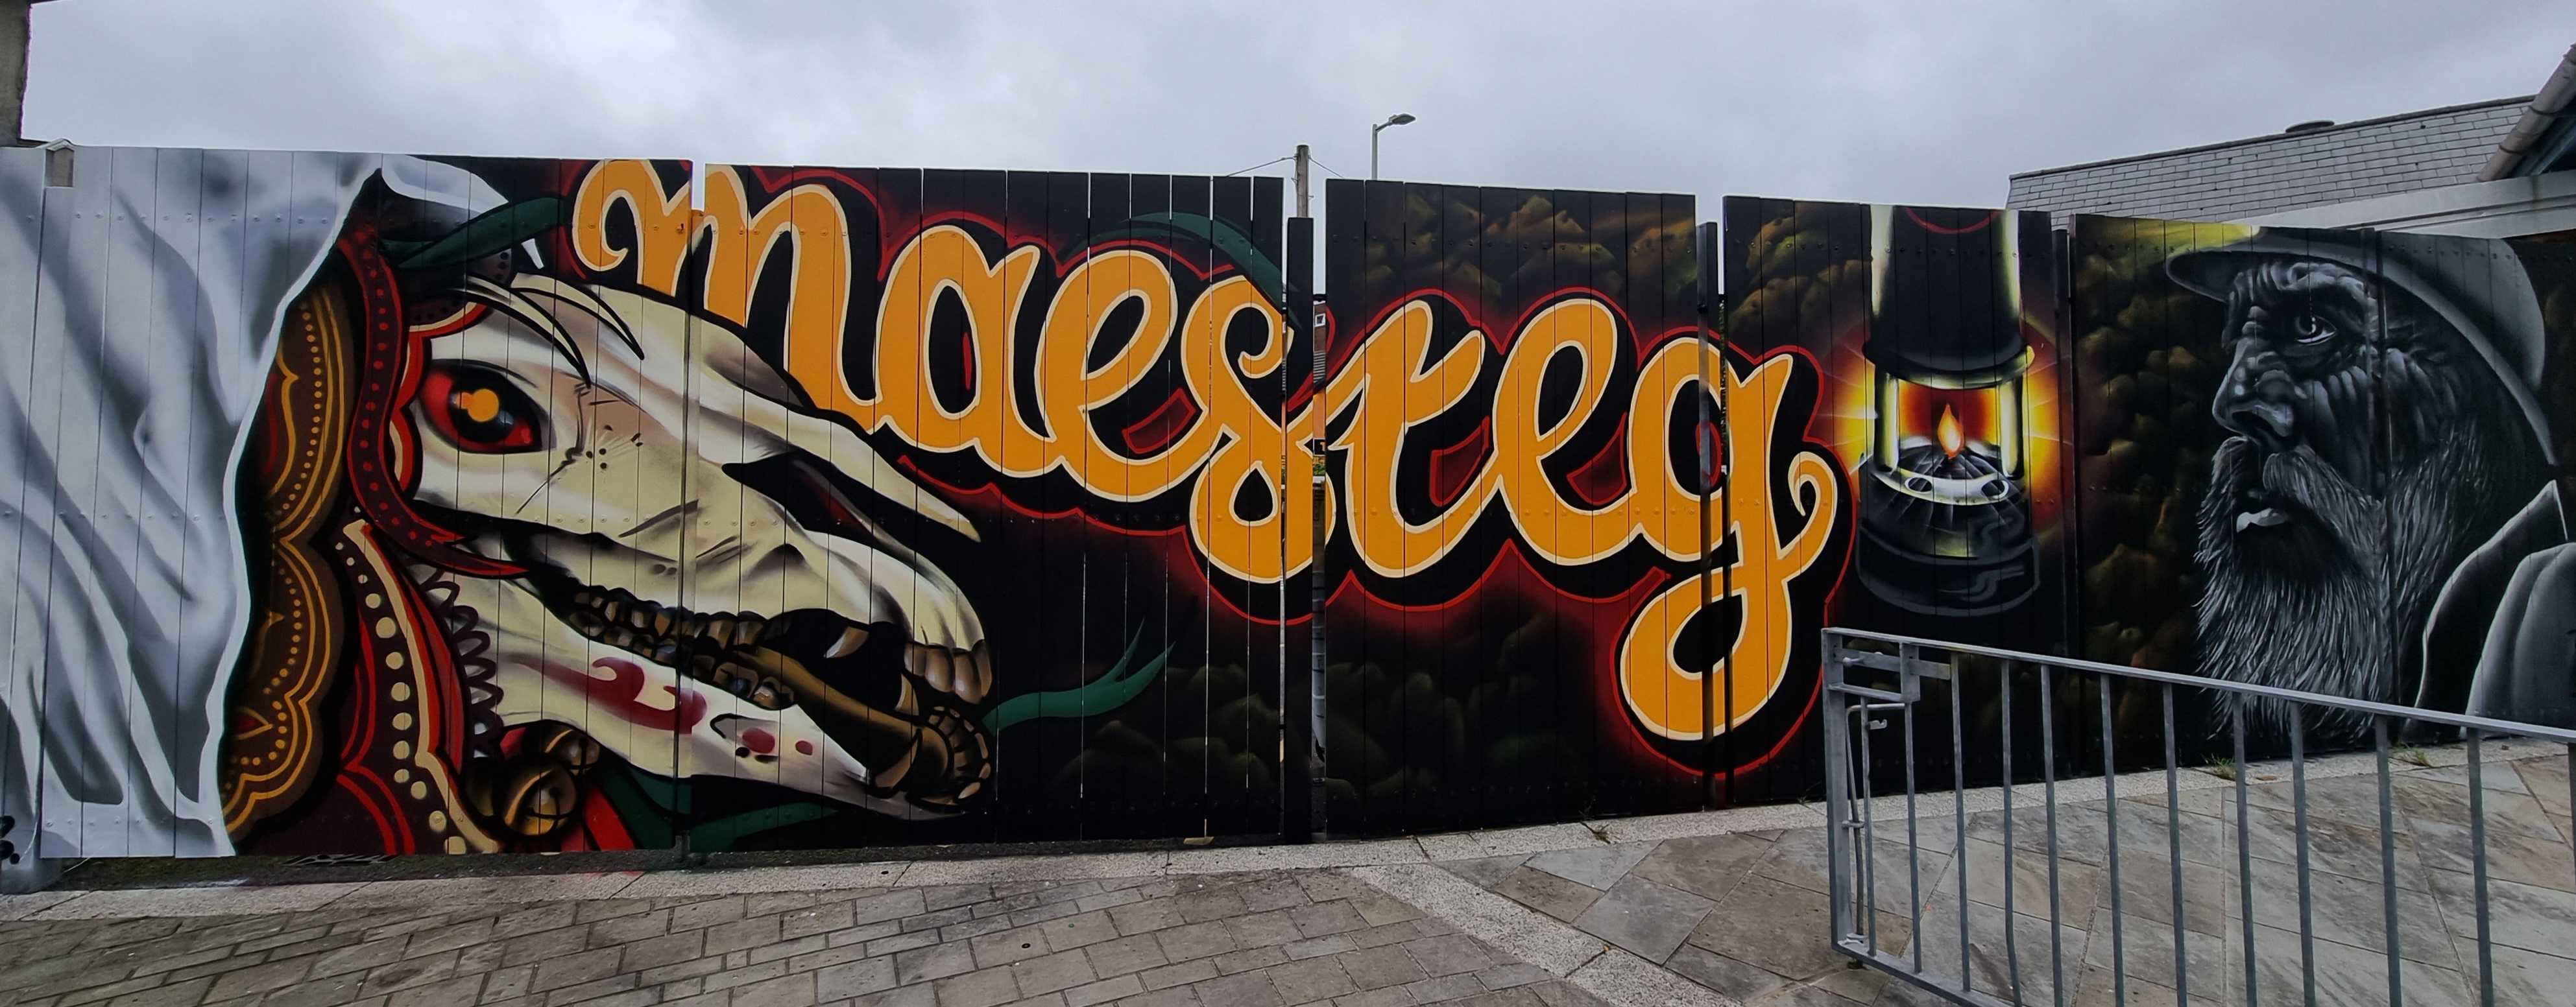 Street art in Maesteg